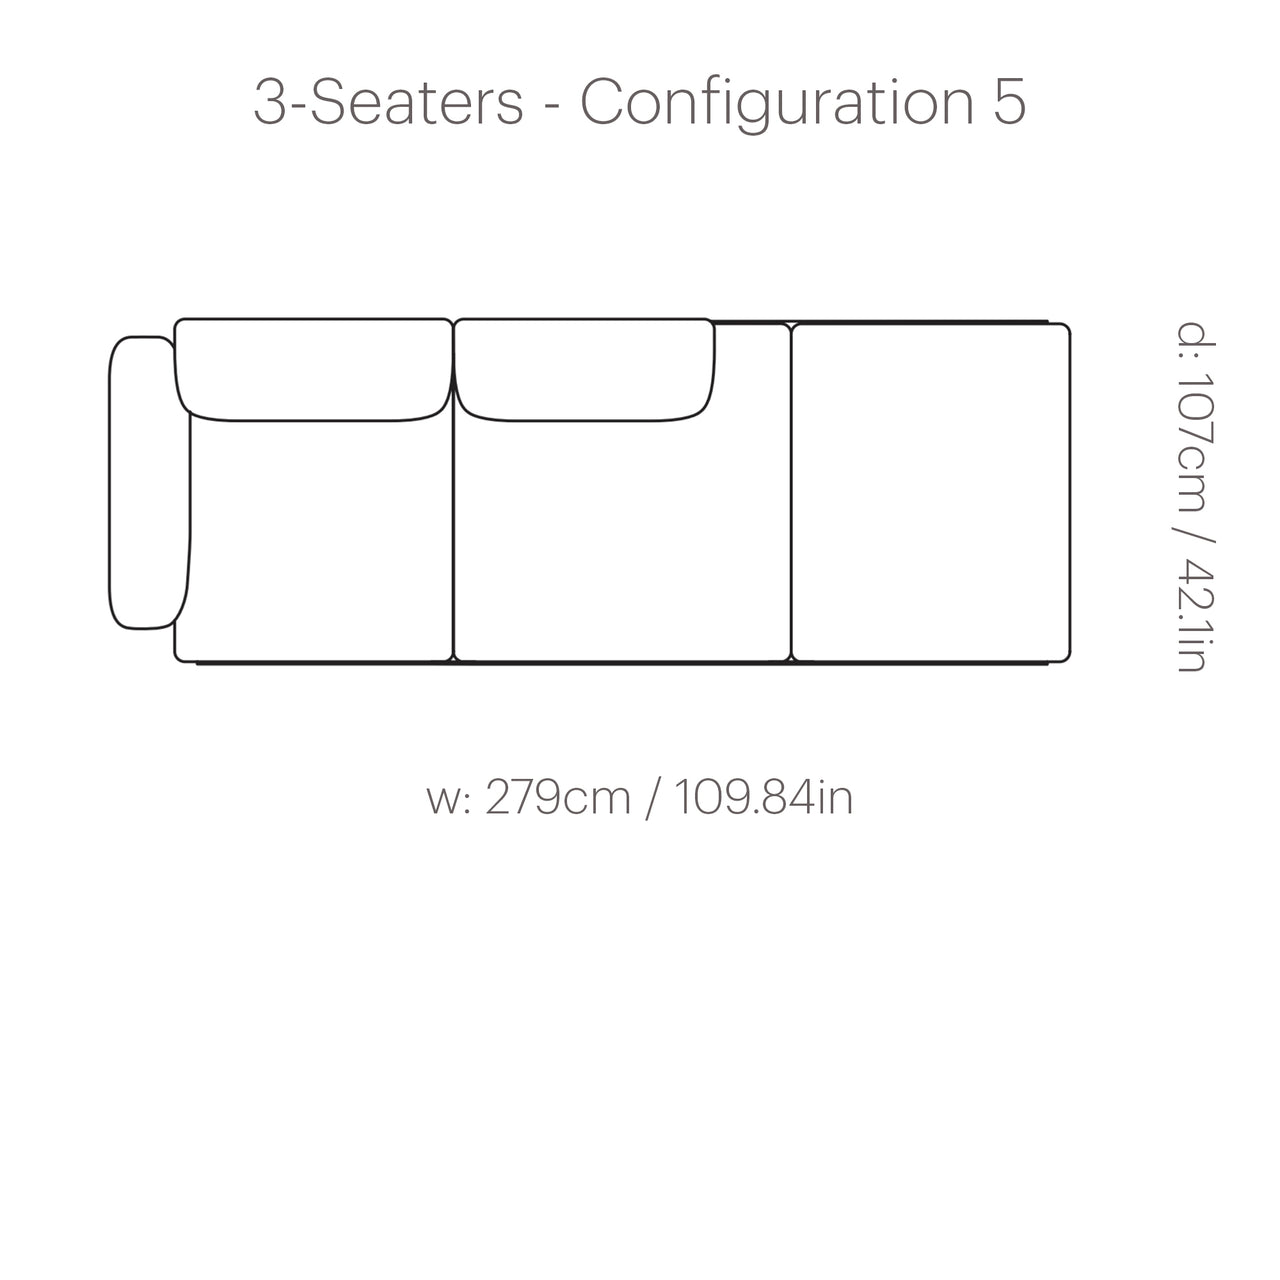 In Situ Modular Sofa: 3 Seater + Configuration 5